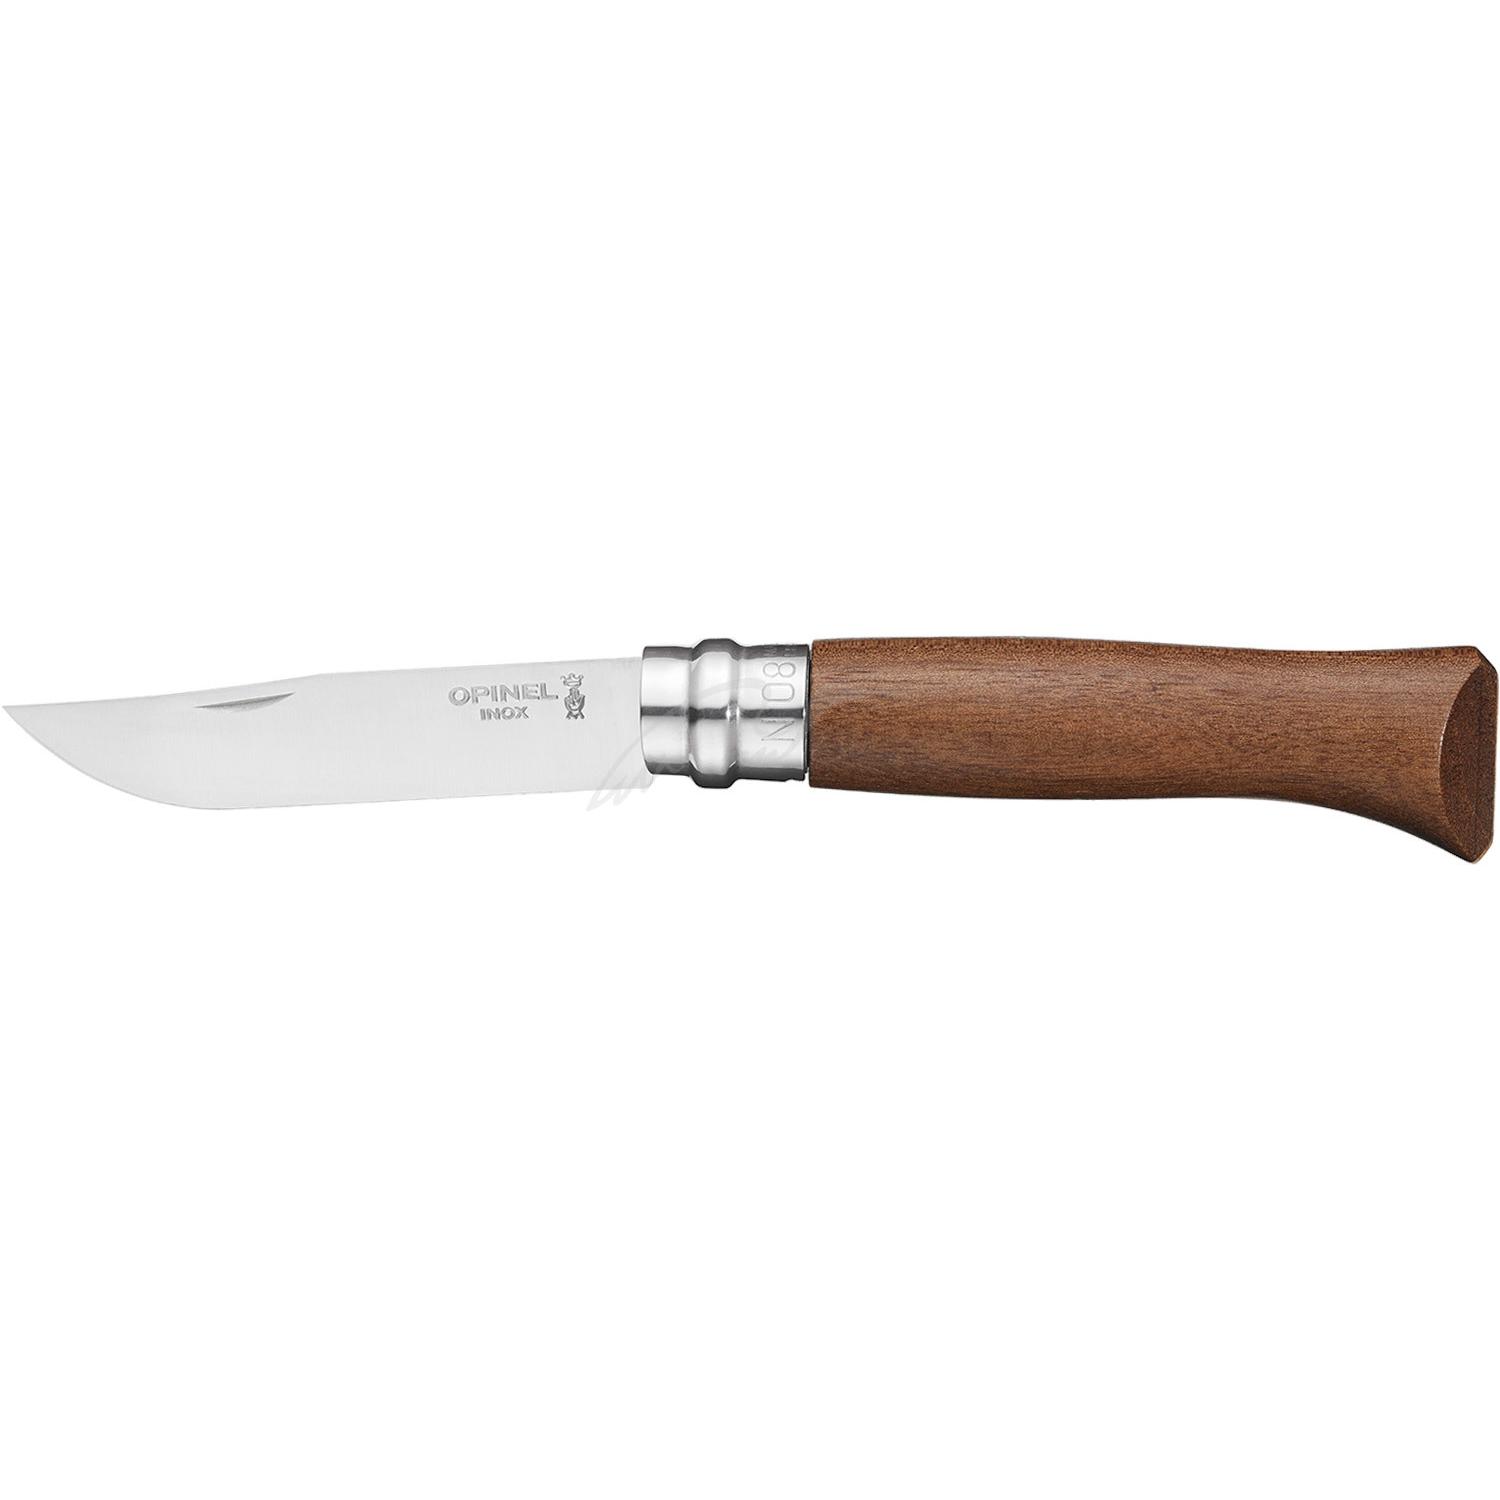 Нож Opinel №8 Inox. Рукоять - орех 002022 204.65.99